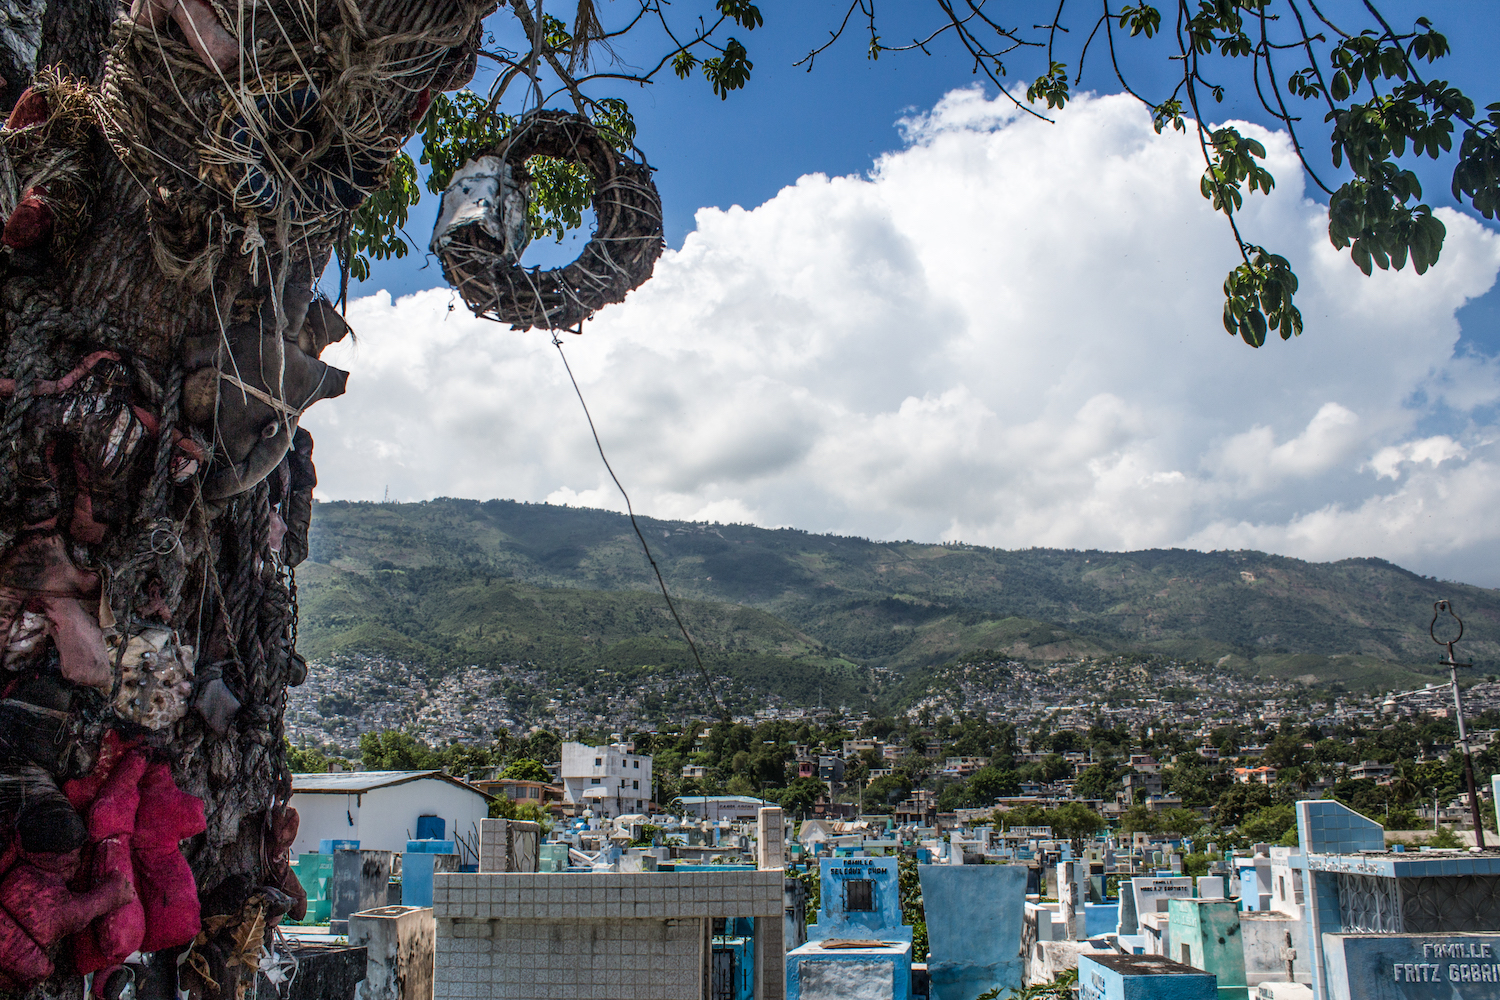 A tree at Le Grand Cimetière, festooned with Vodou dolls and offerings. © Darmon Richter http://www.thebohemianblog.com/2015/04/haitian-vodou-port-au-prince.html